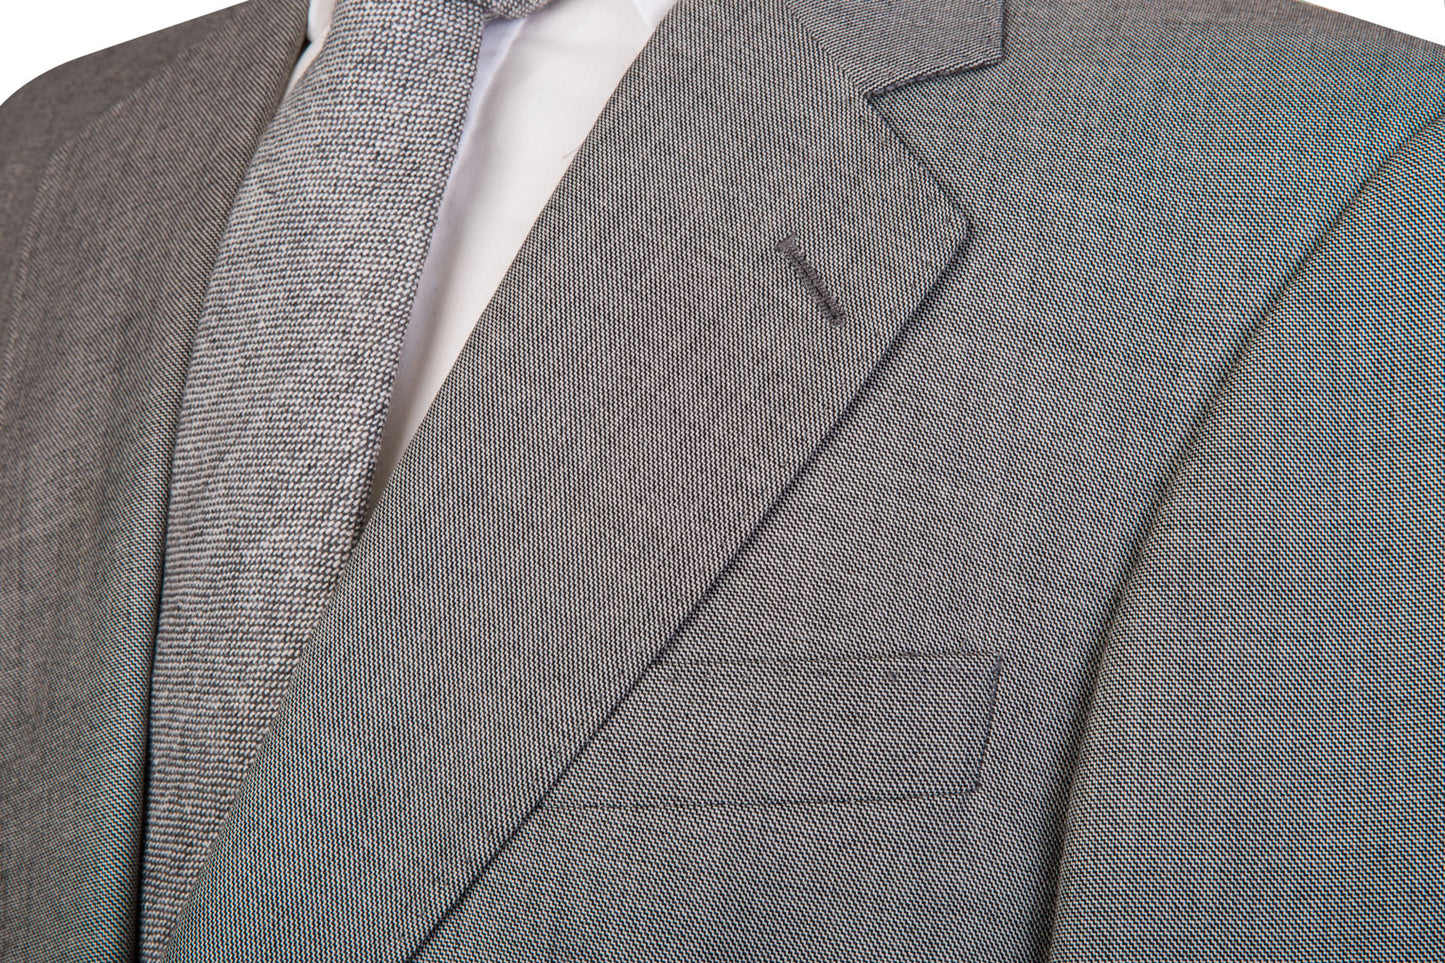 Dove Grey Suit Jacket - Ex Hire